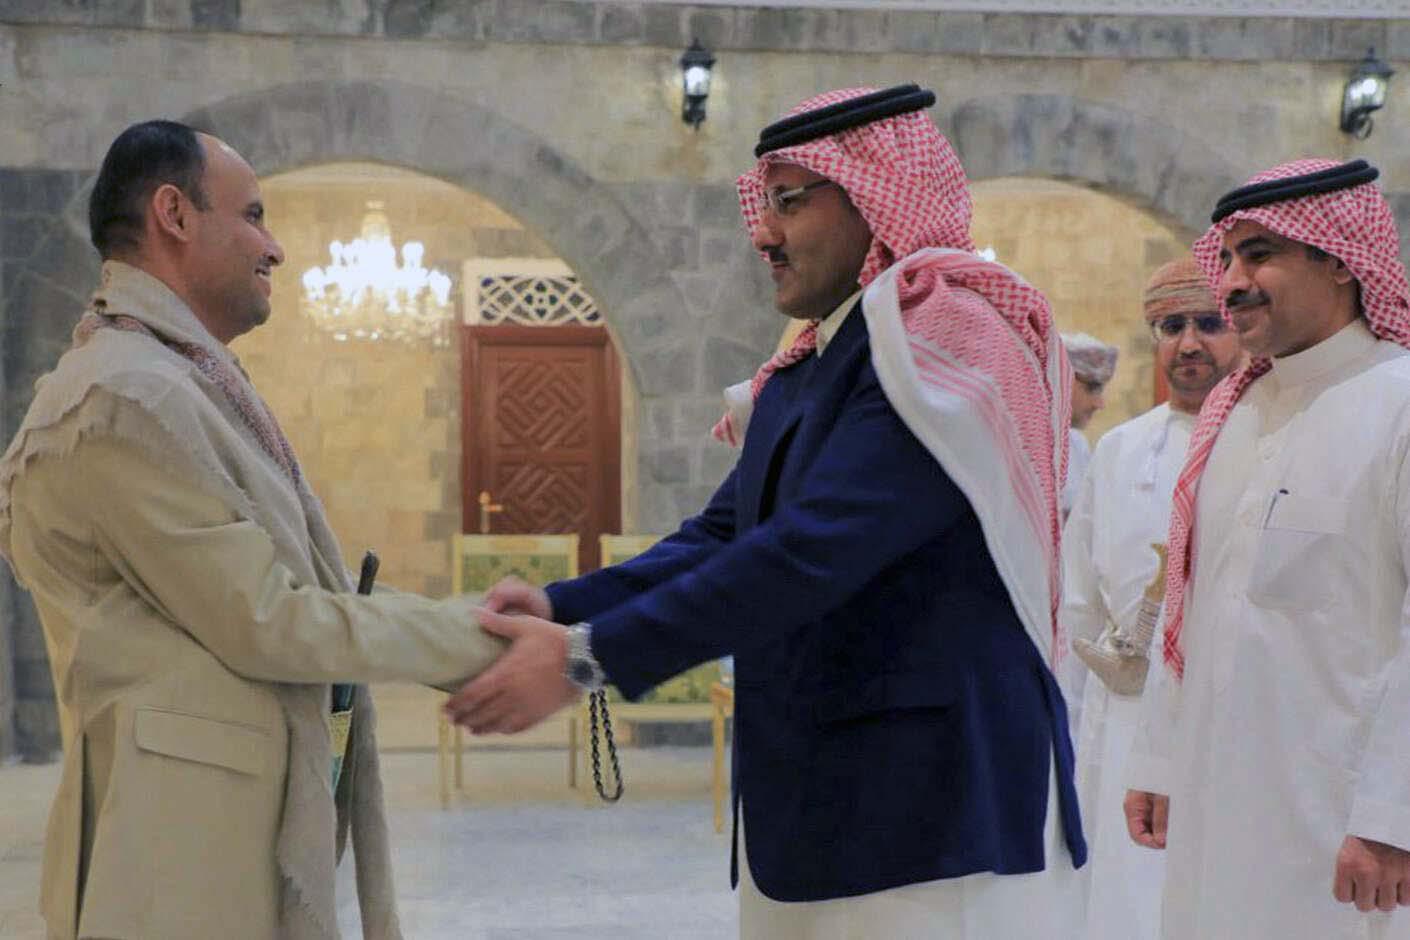 Houthis' political leader Mahdi al-Mashat (L) welcoming the Saudi ambassador to Yemen Mohammed Al Jaber